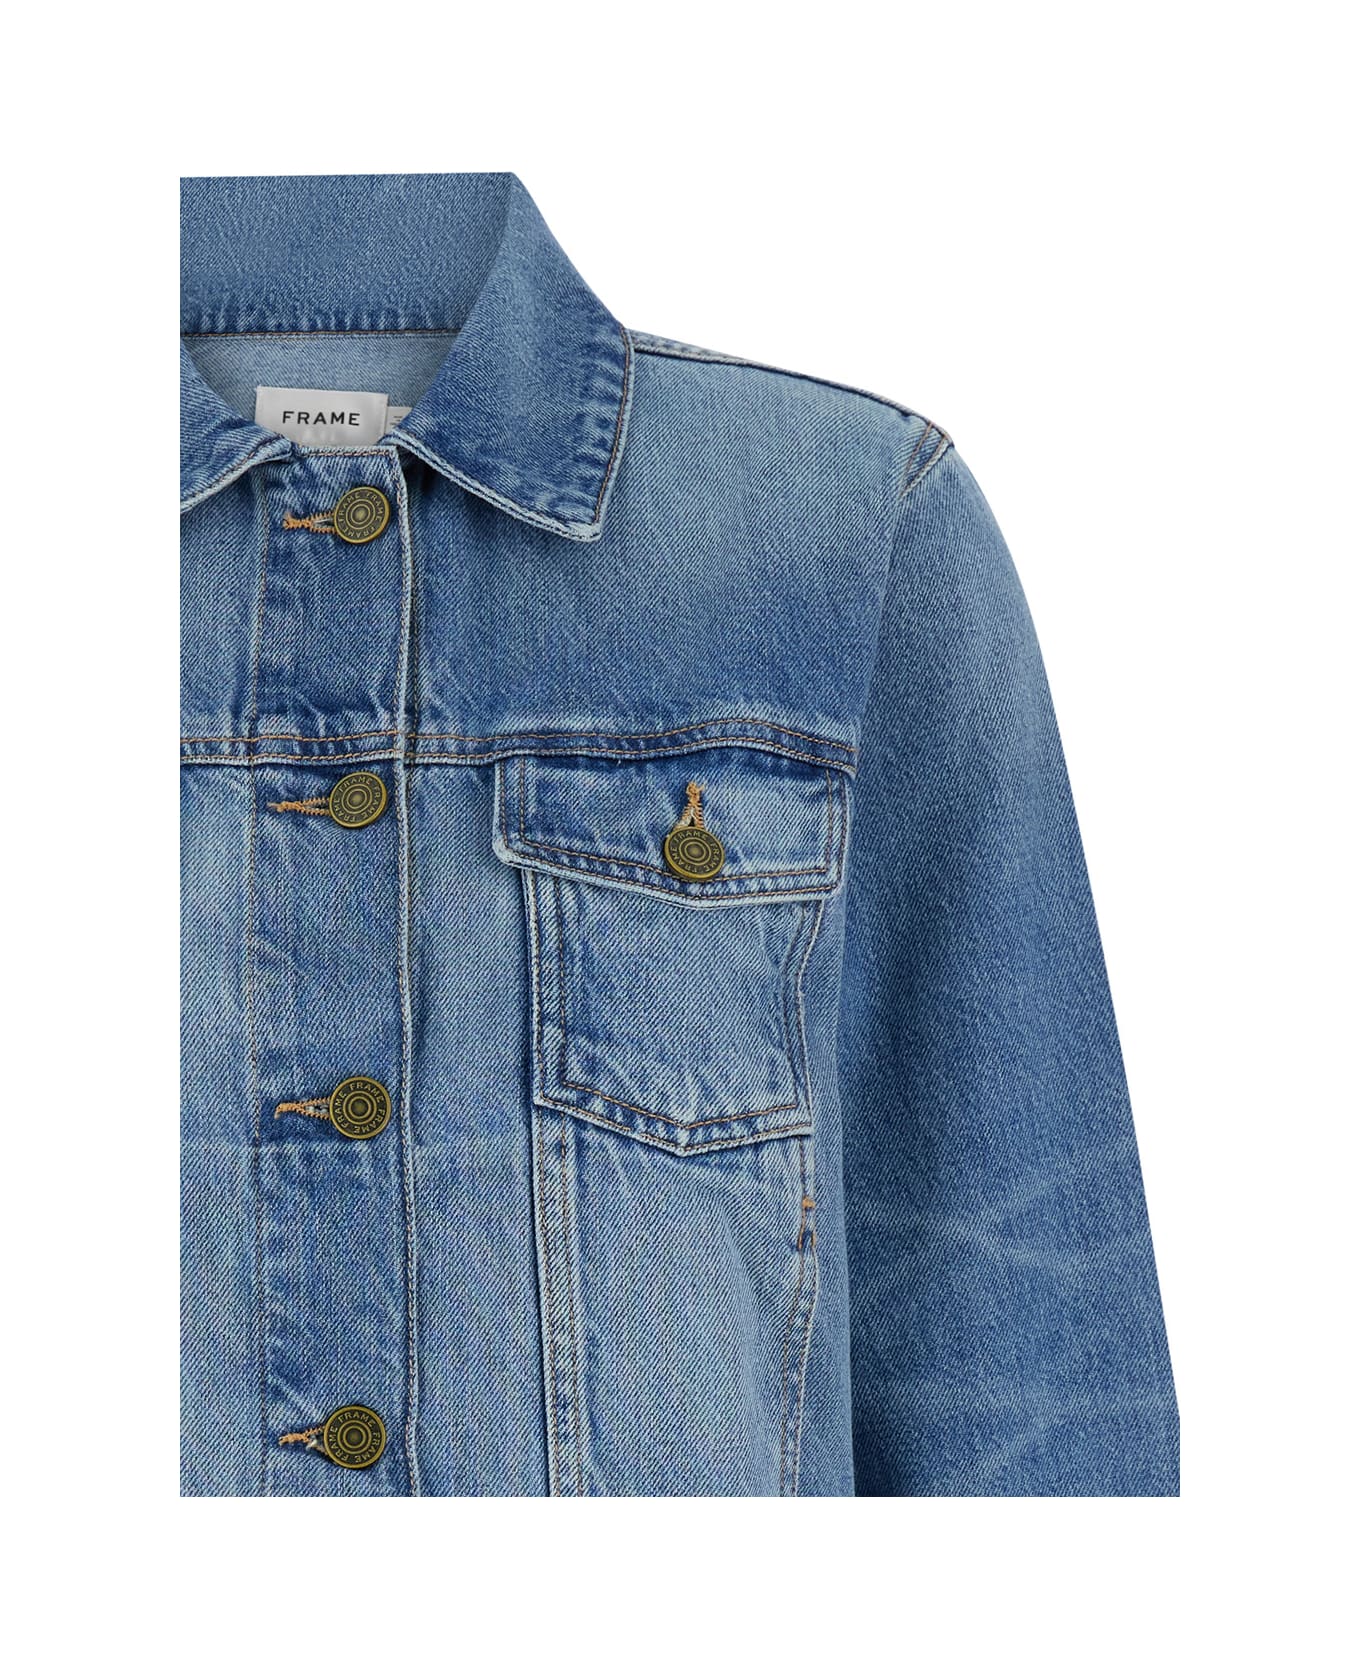 Frame Denim Jacket - Blu ジャケット